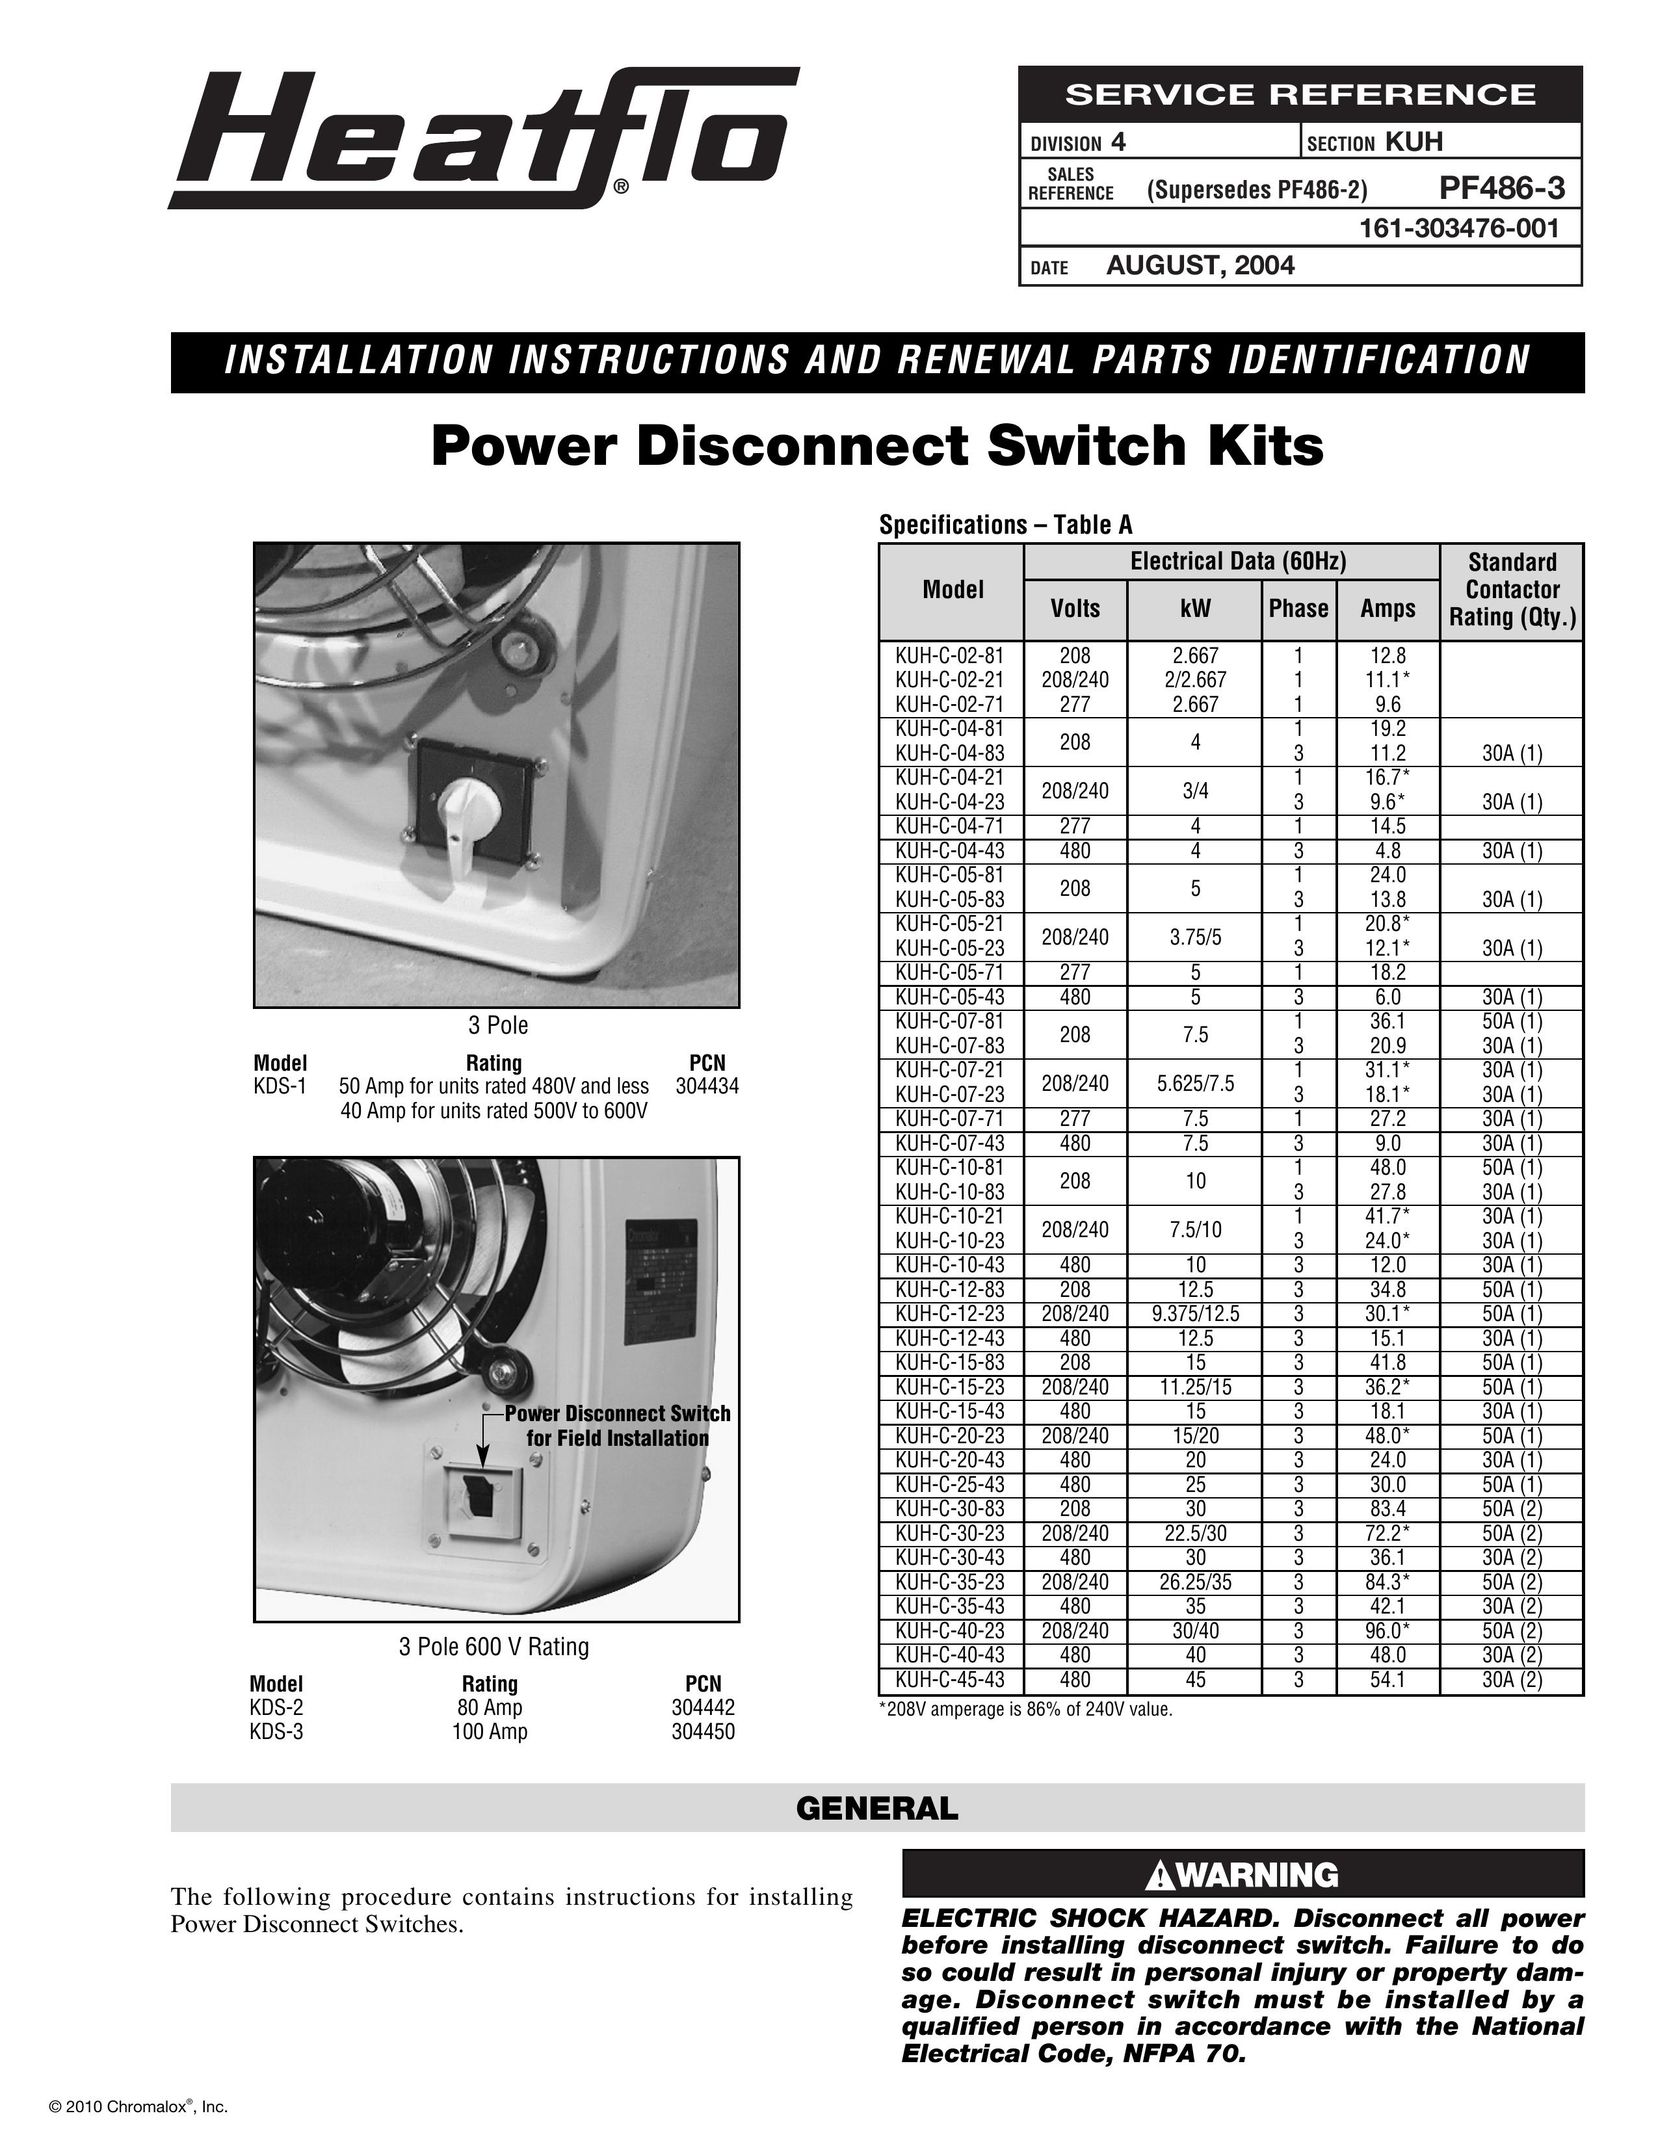 Chromalox KDS-2 Switch User Manual